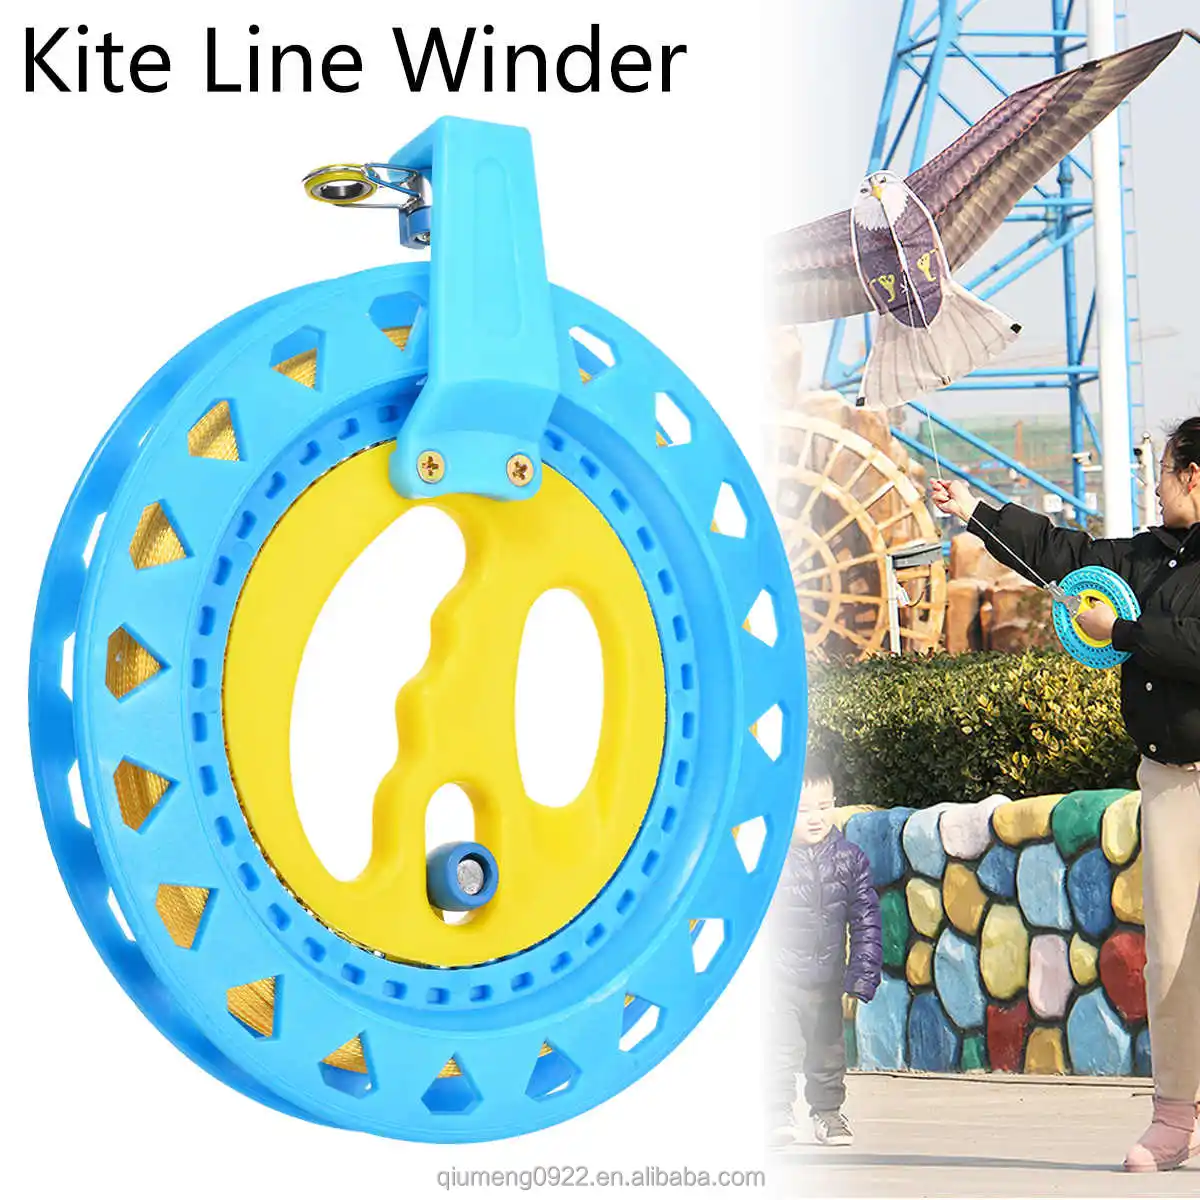 200M Kite String Line Winder Winding